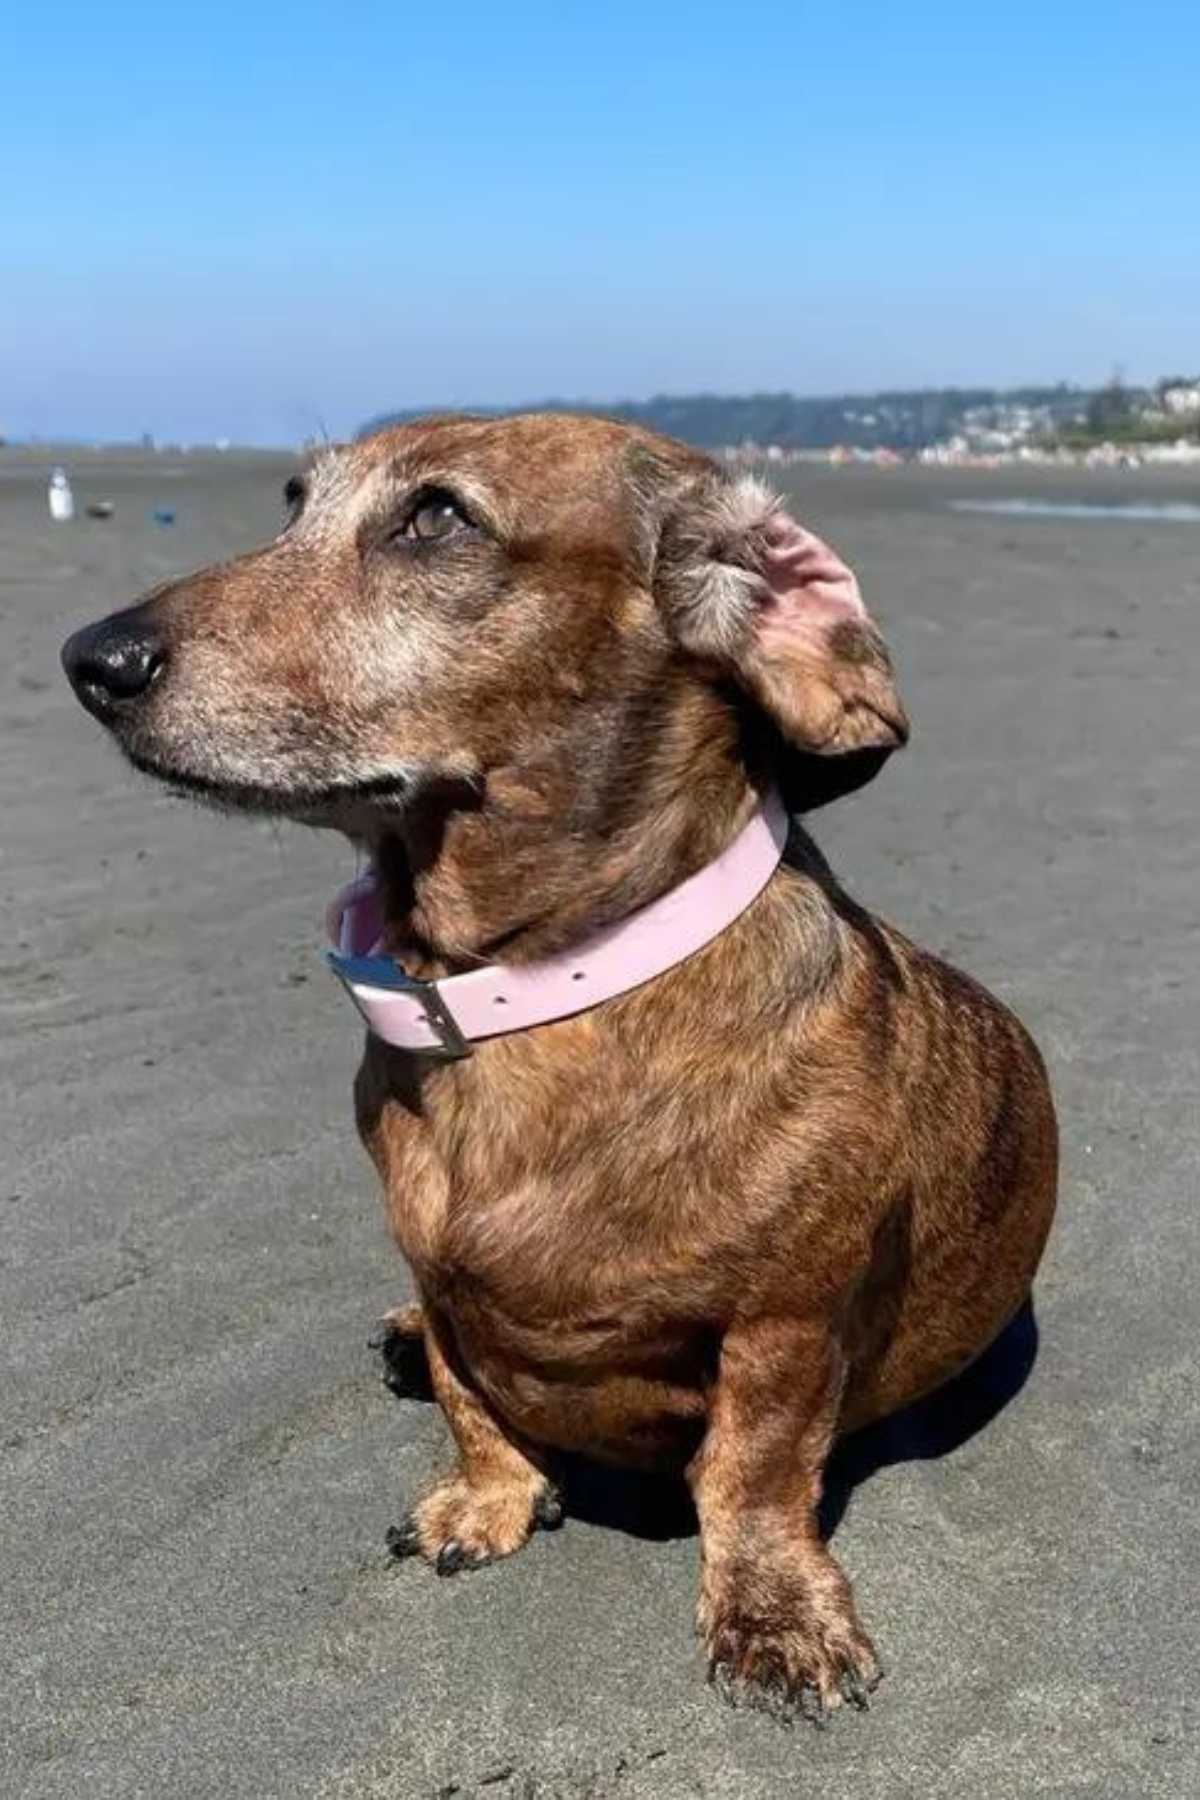 Waterproof Dog Collar - Light Pink